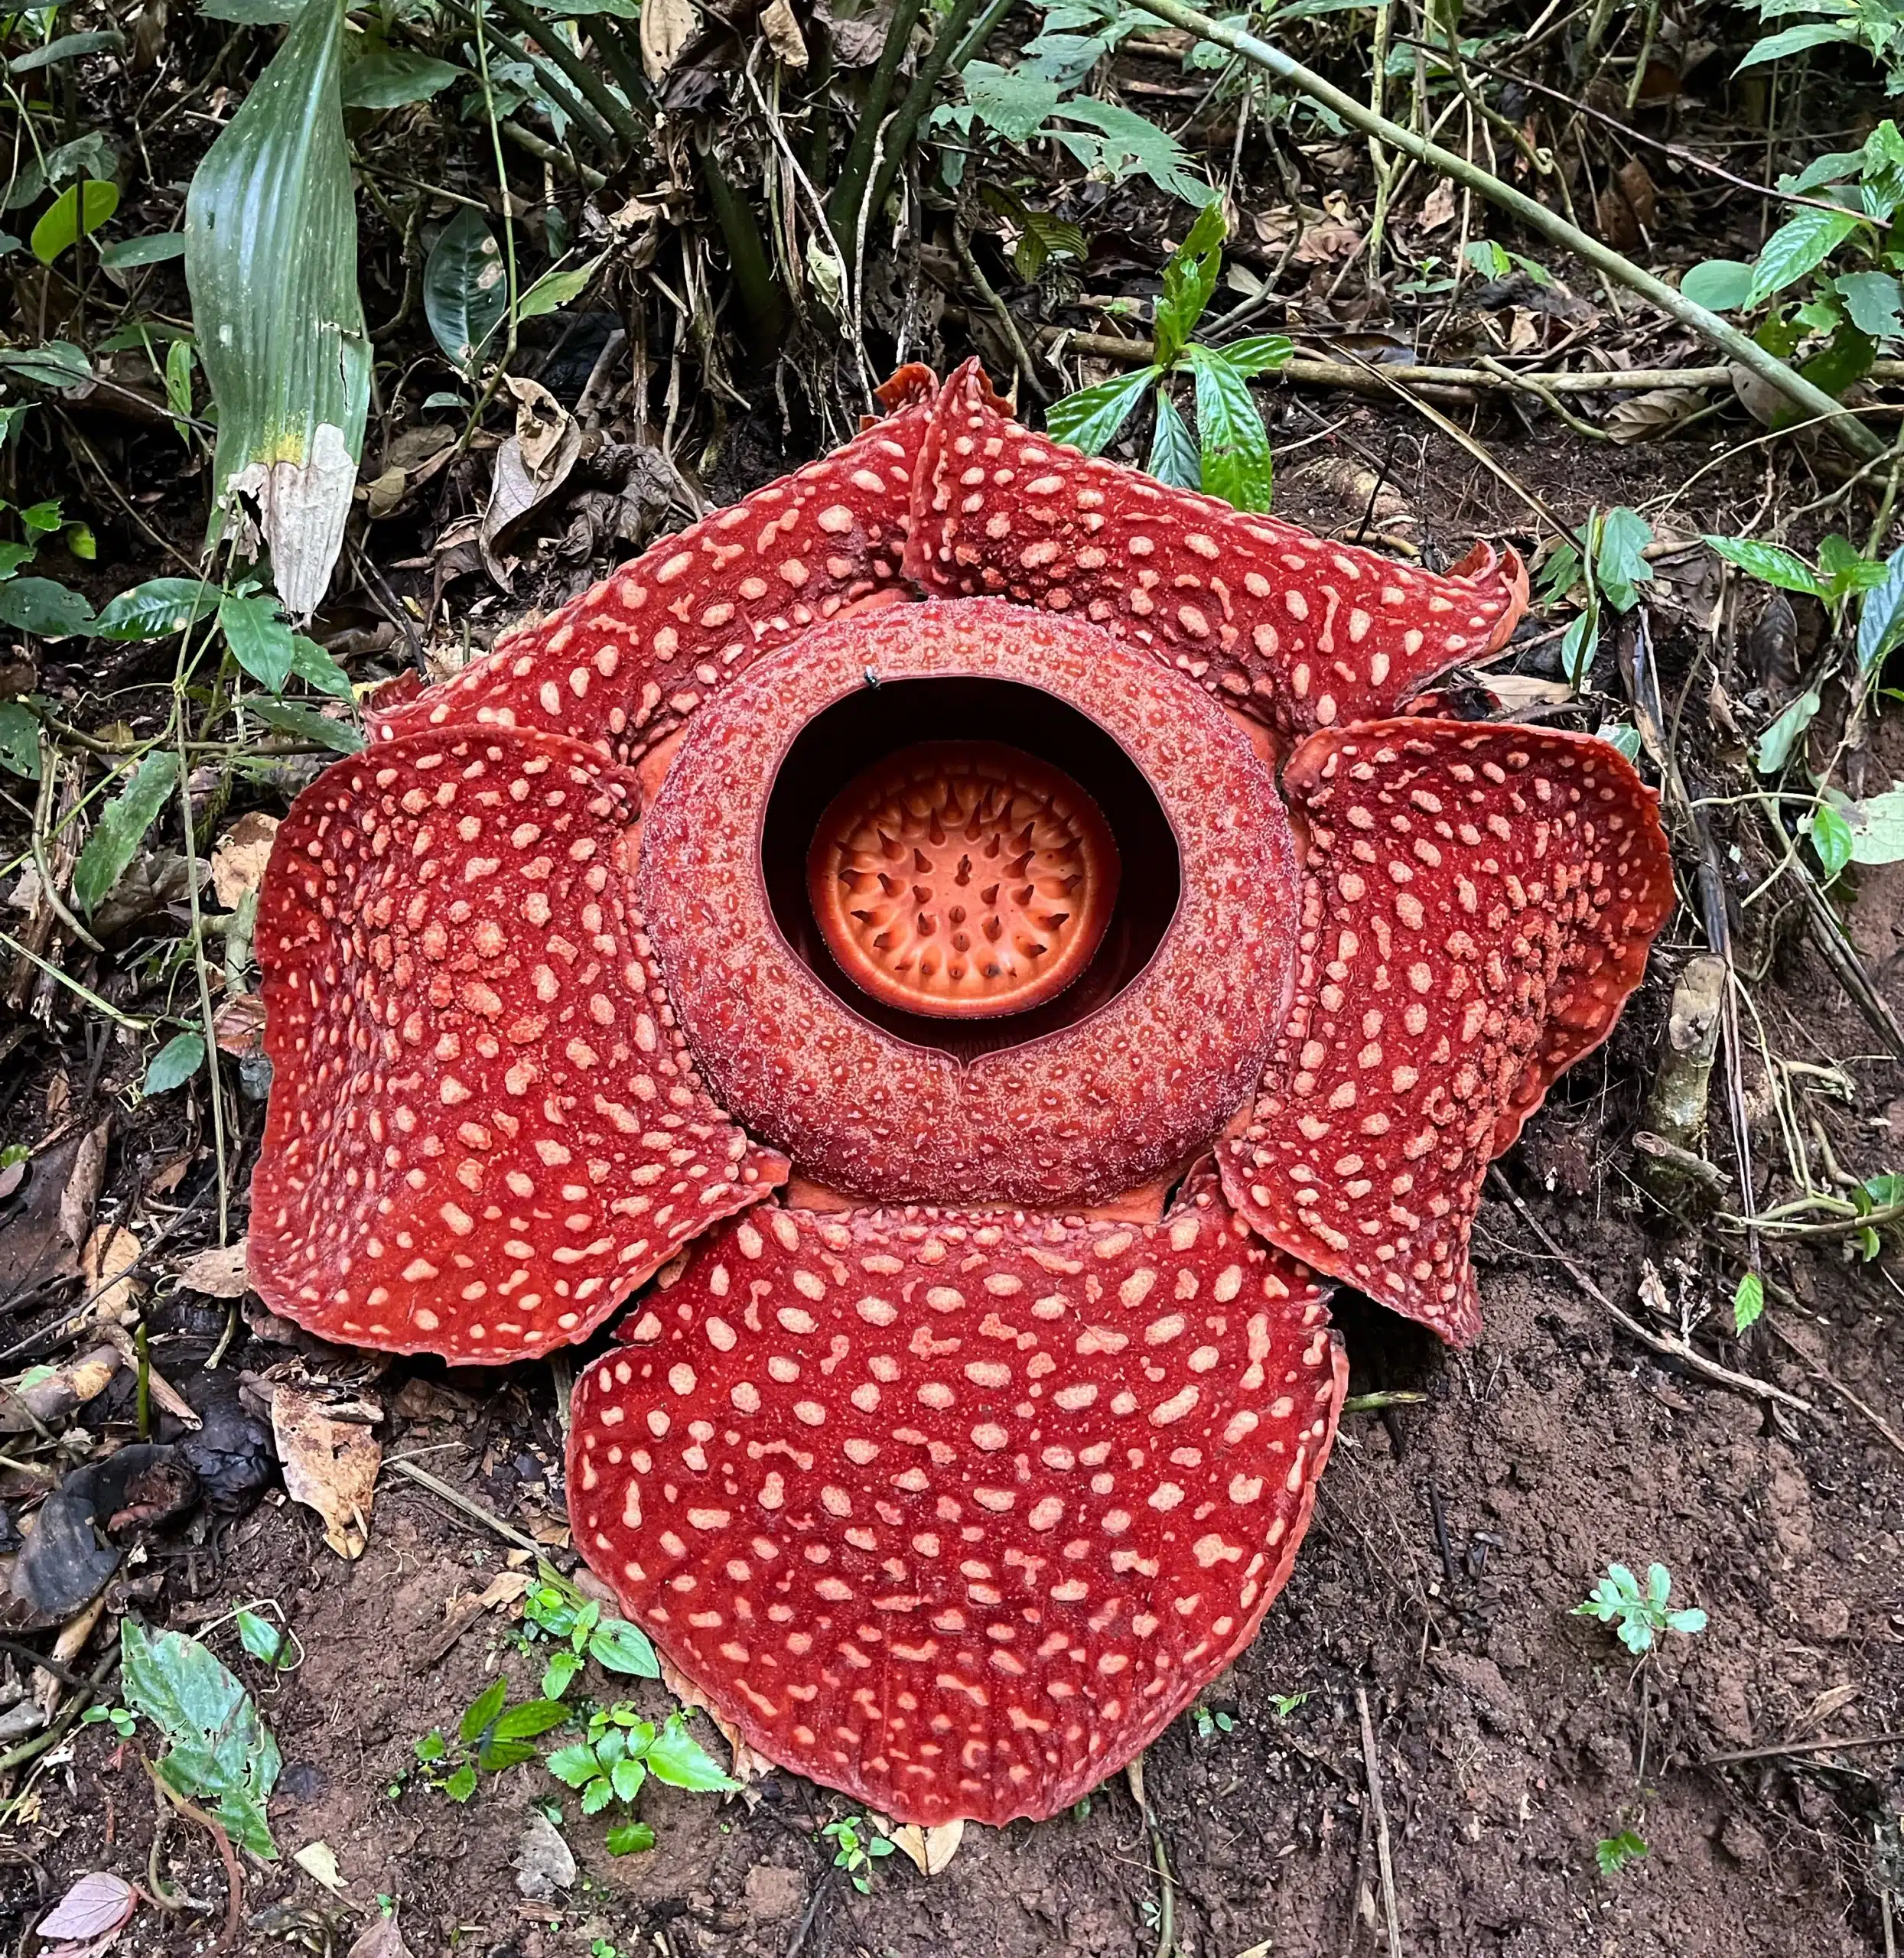 Rafflesia Arnoldii